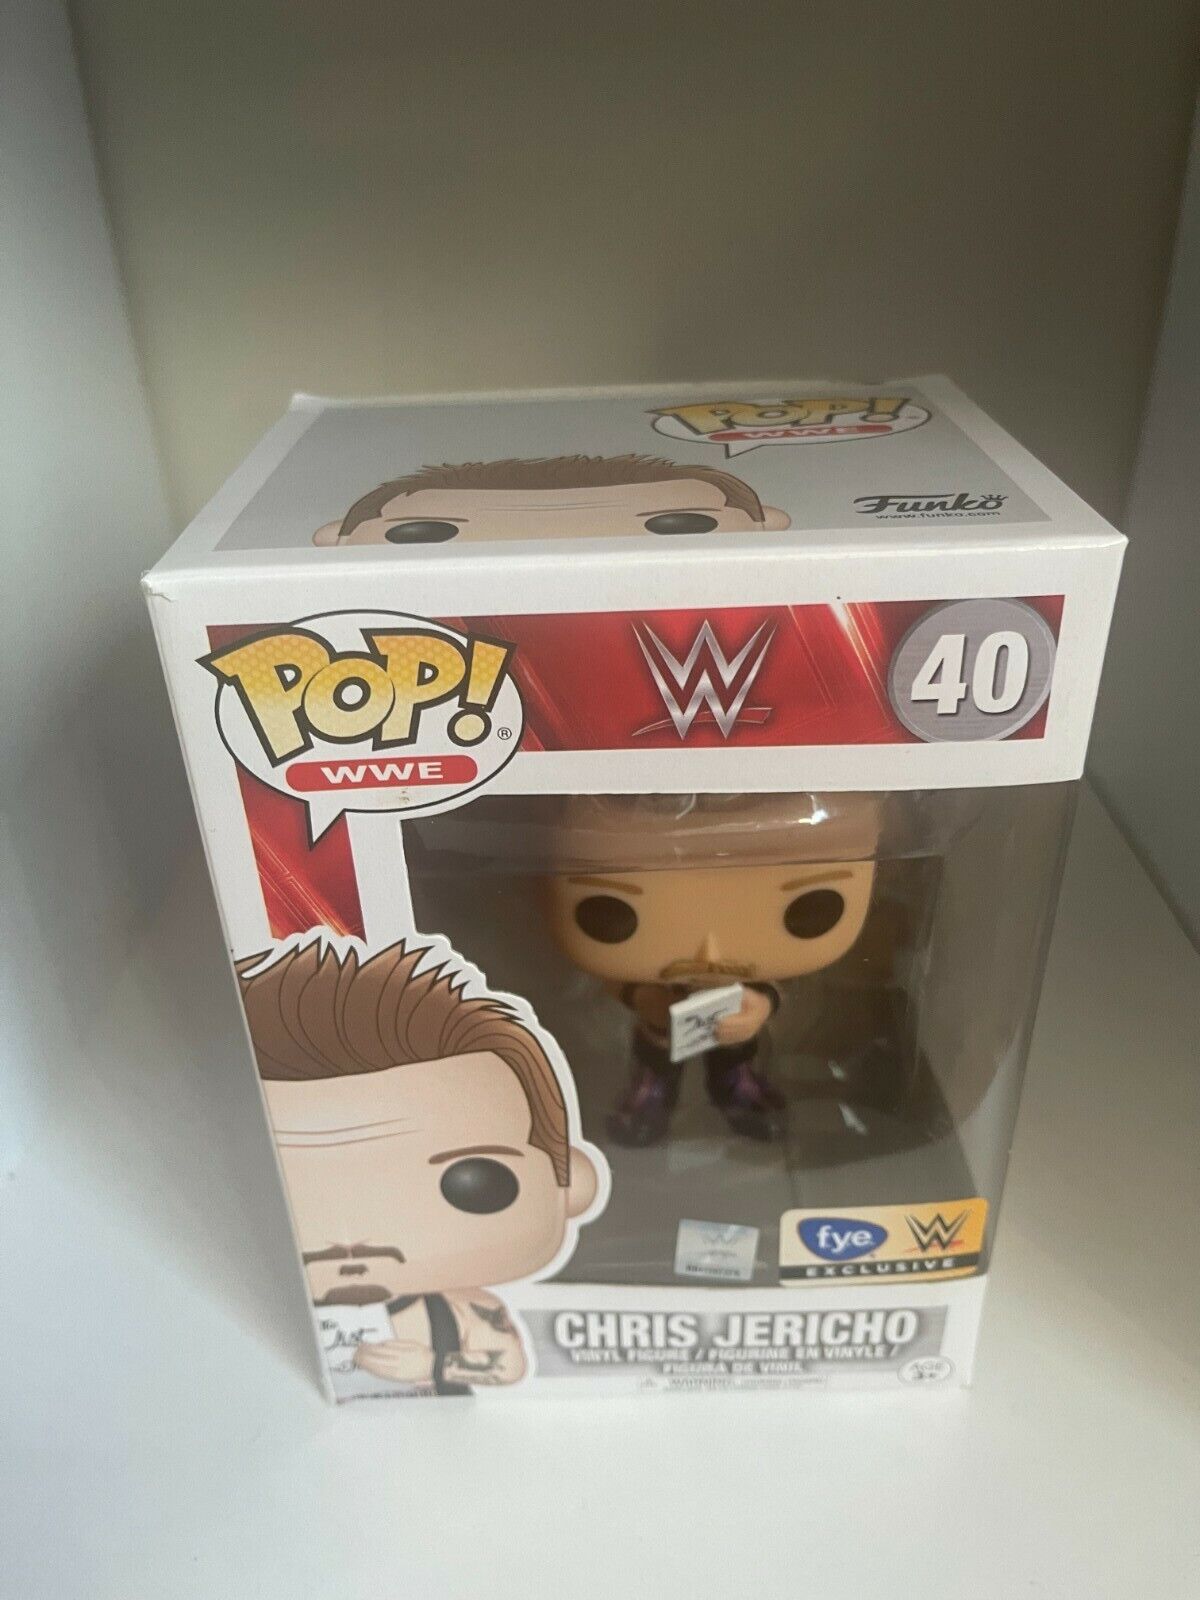 CHRIS JERICHO FYE Exclusive Funko Pop WWE Vinyl Figure #40 the List of Jericho